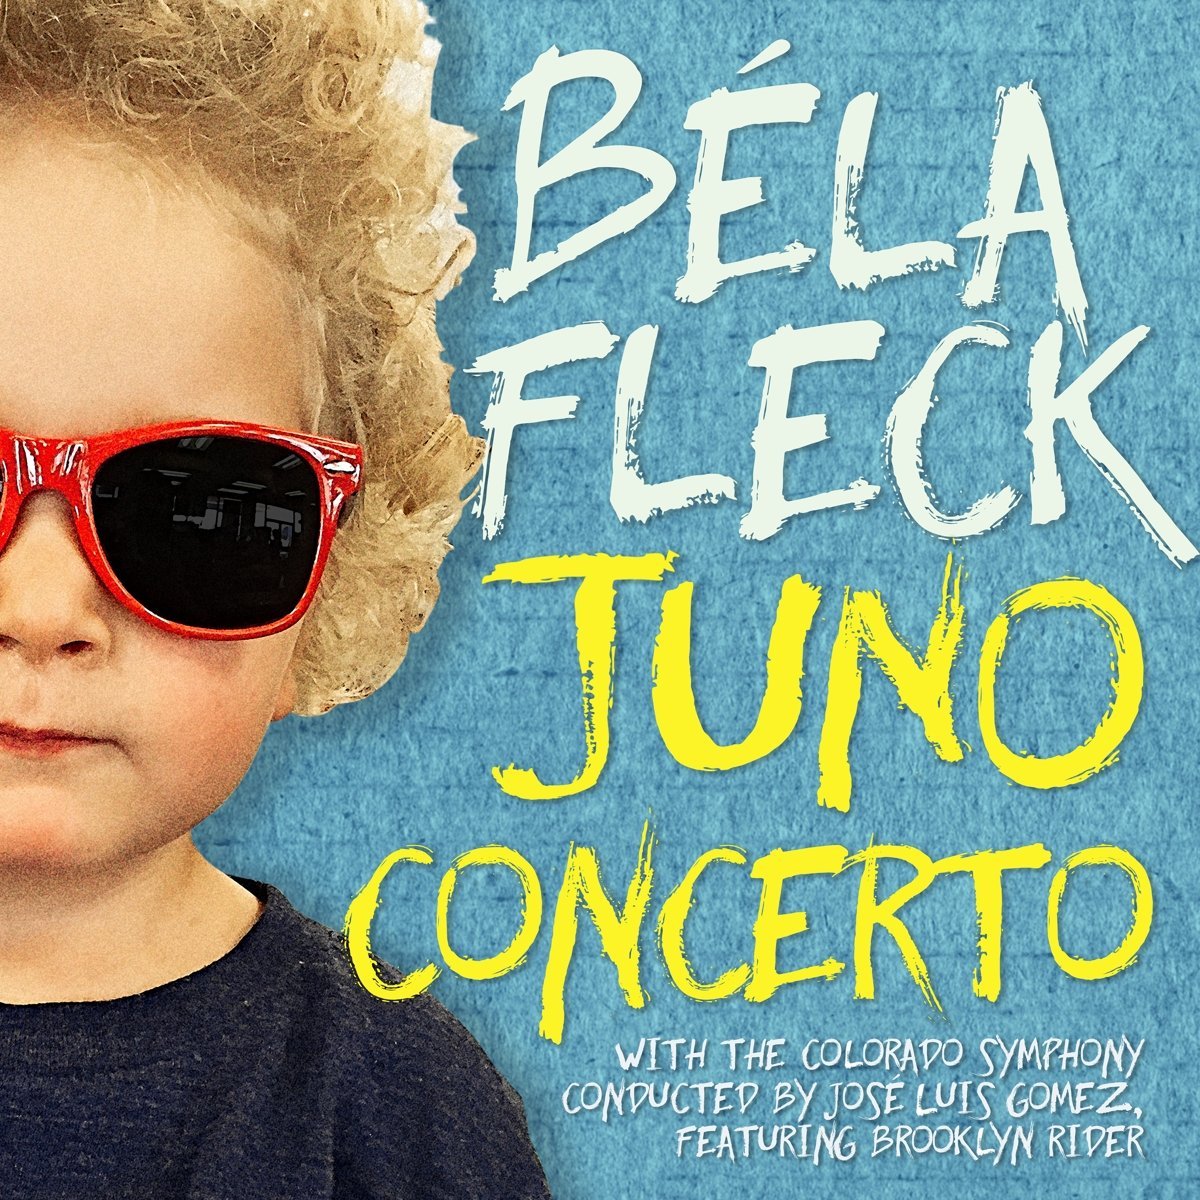 Béla Fleck, Juno Concerto album cover. Photo by: Béla Fleck / Twitter